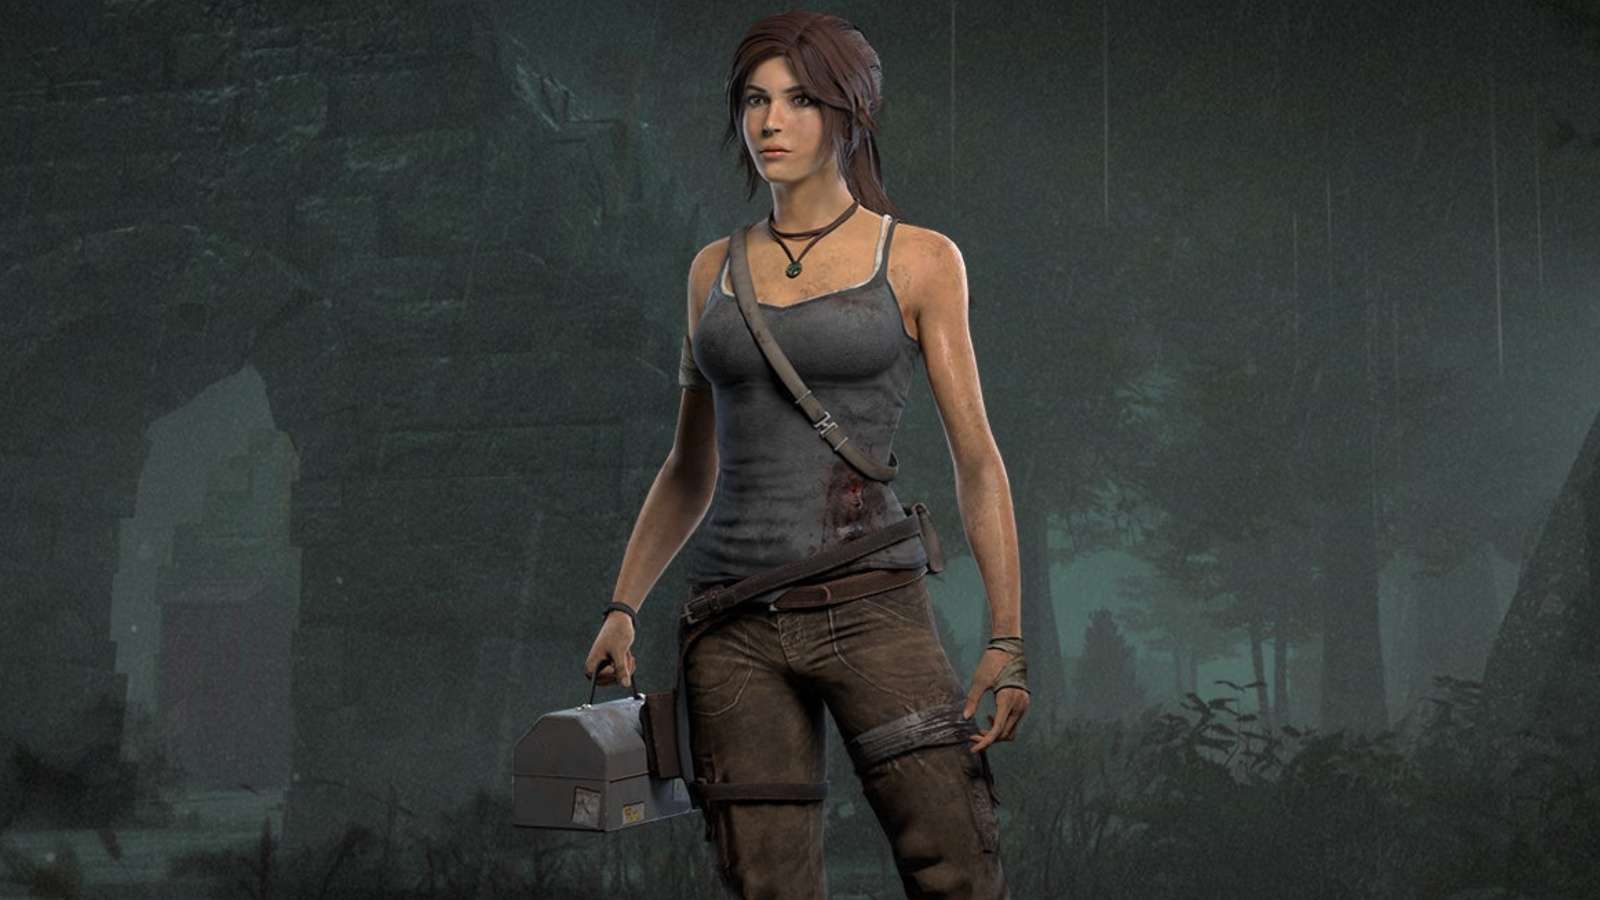 A screenshot featuring Lara Croft in Dead by Daylight.